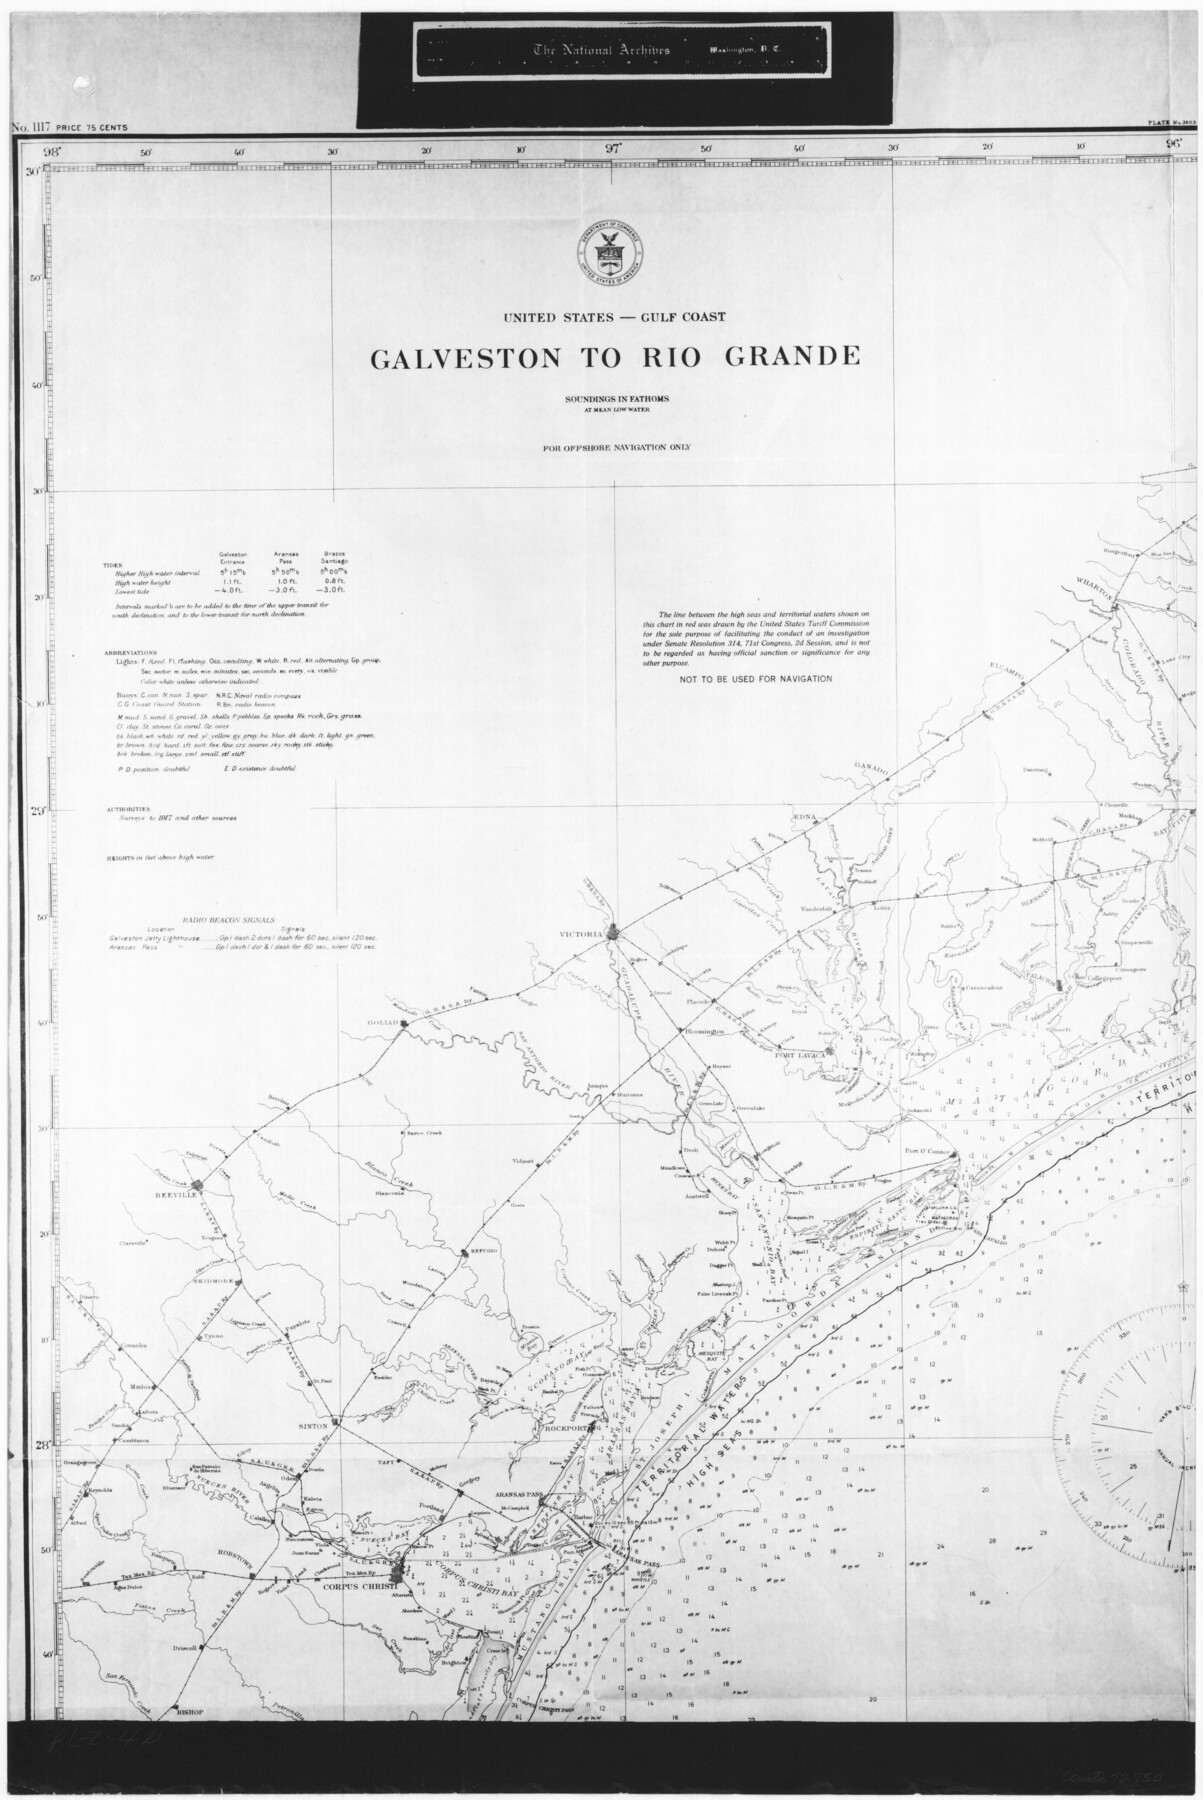 72750, United States - Gulf Coast - Galveston to Rio Grande, General Map Collection